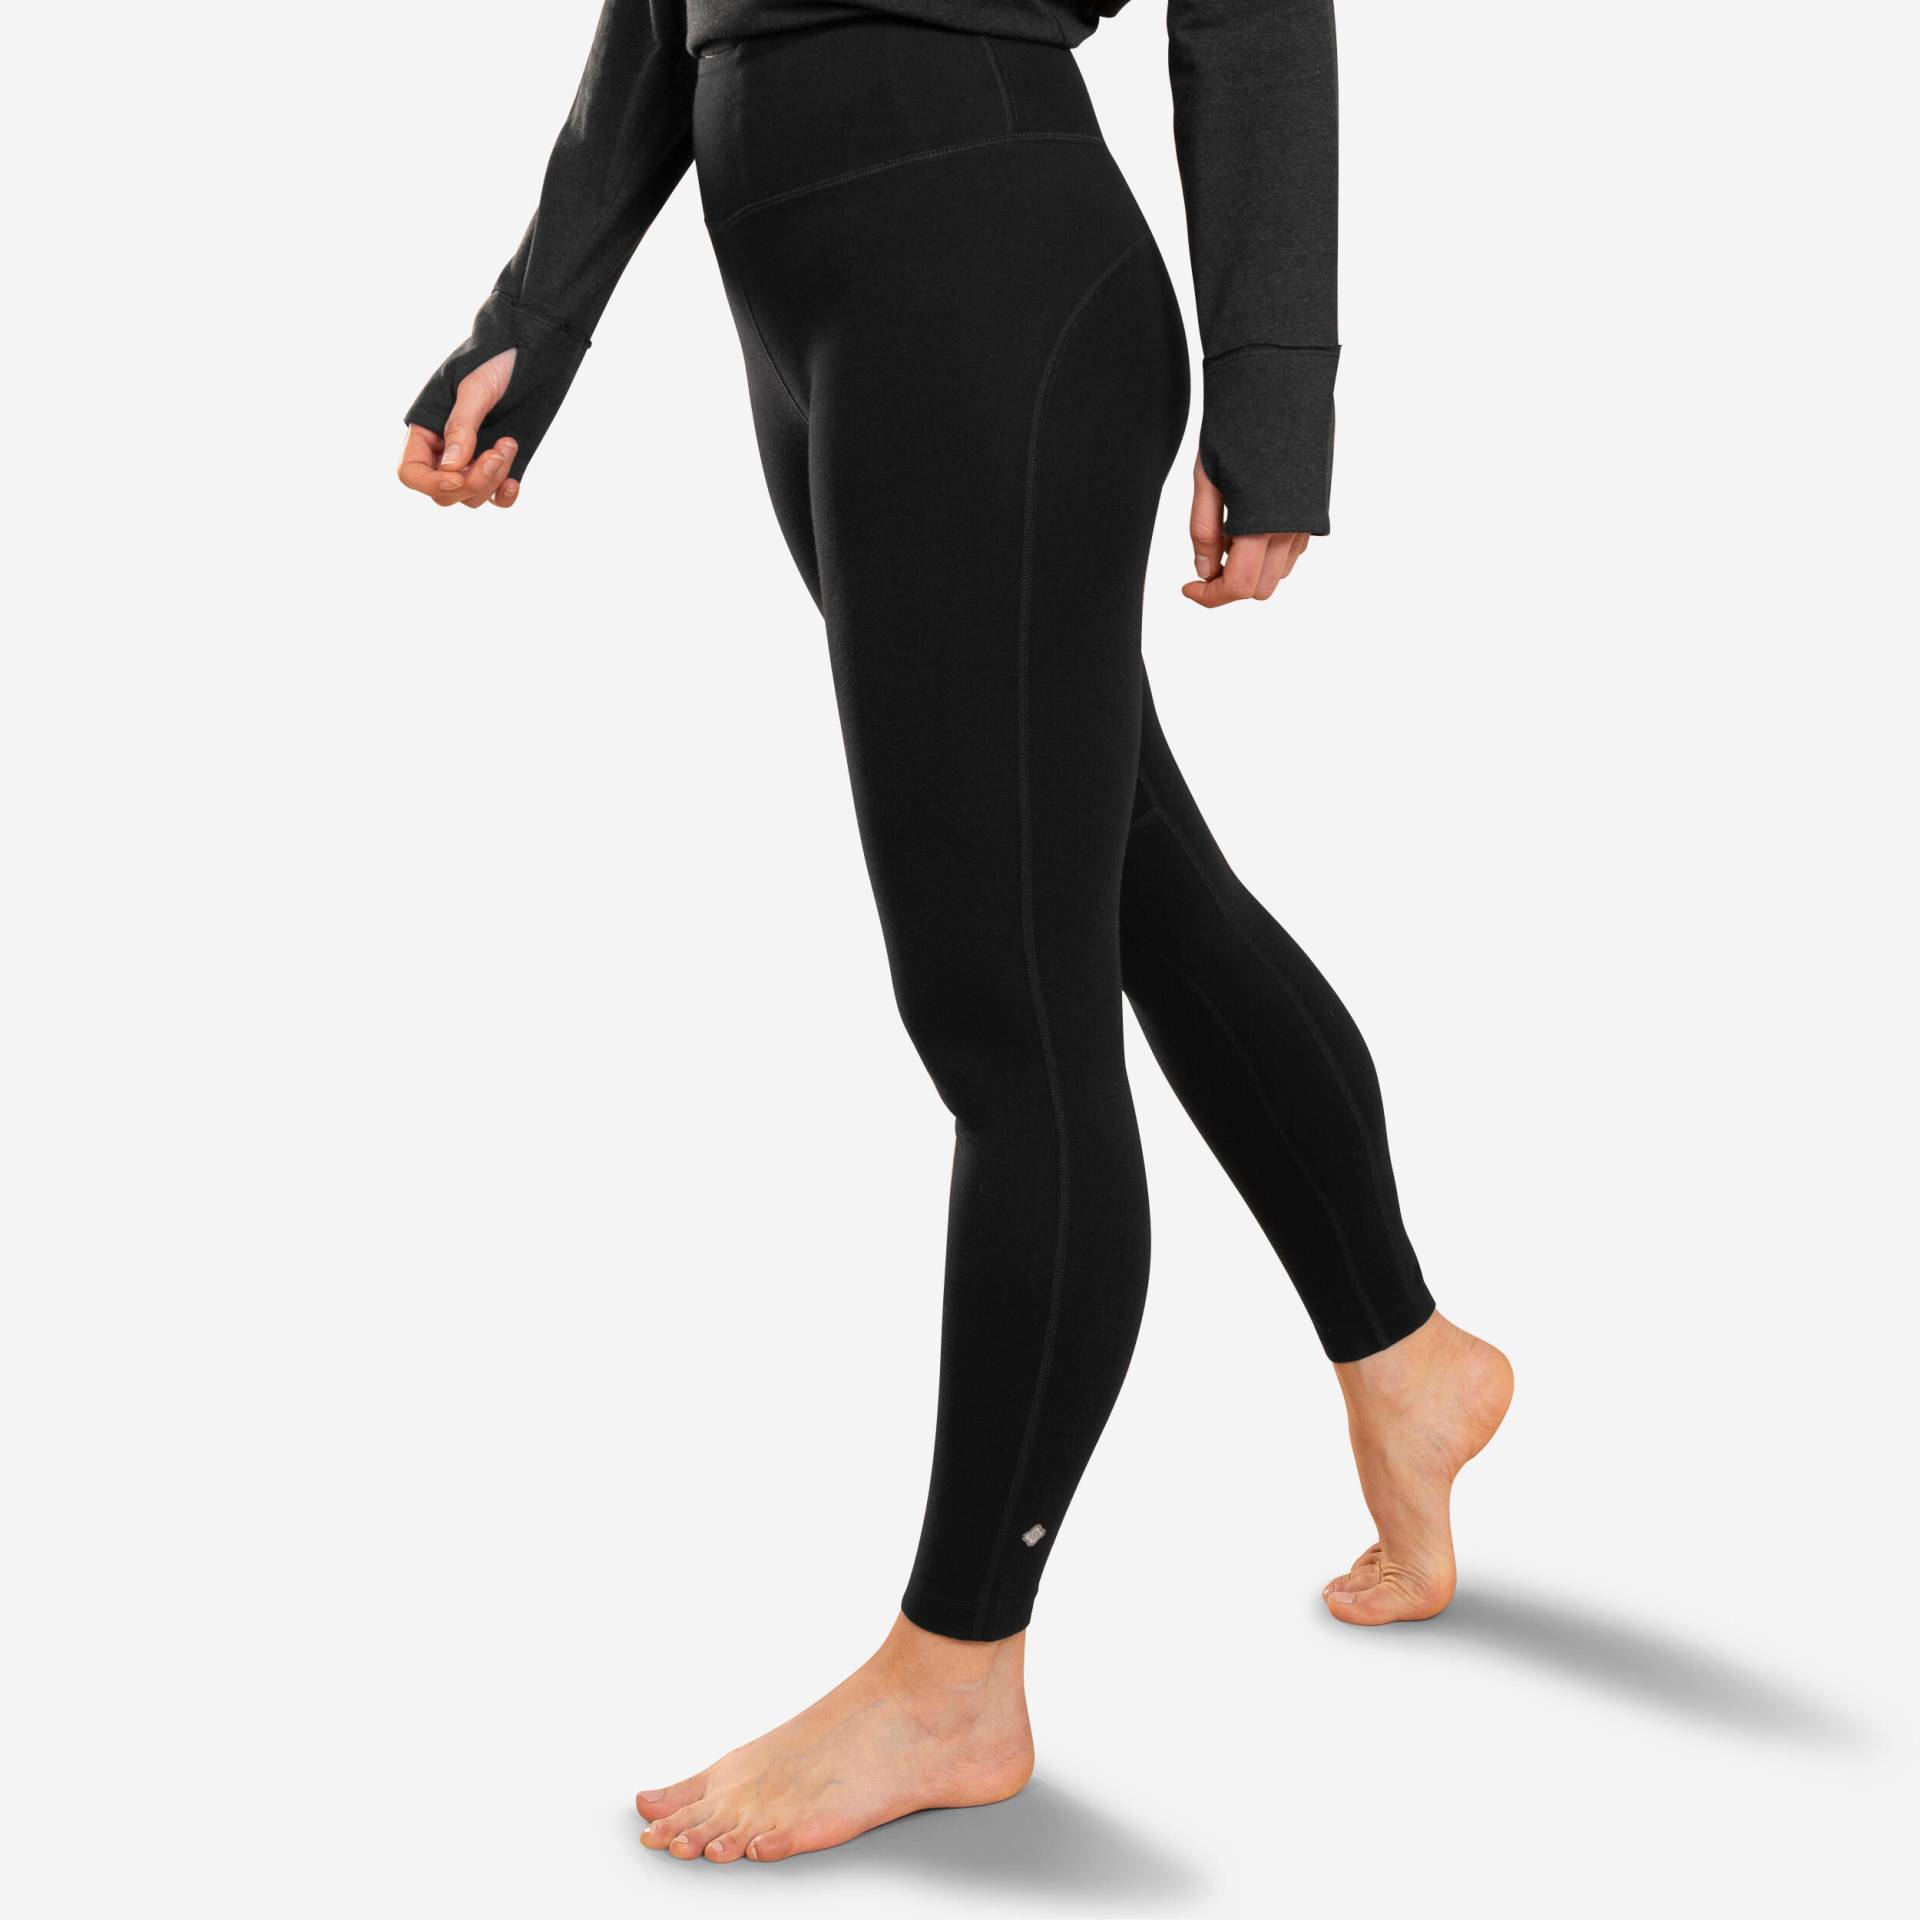 Leggings Yoga Damen Baumwolle - schwarz von KIMJALY